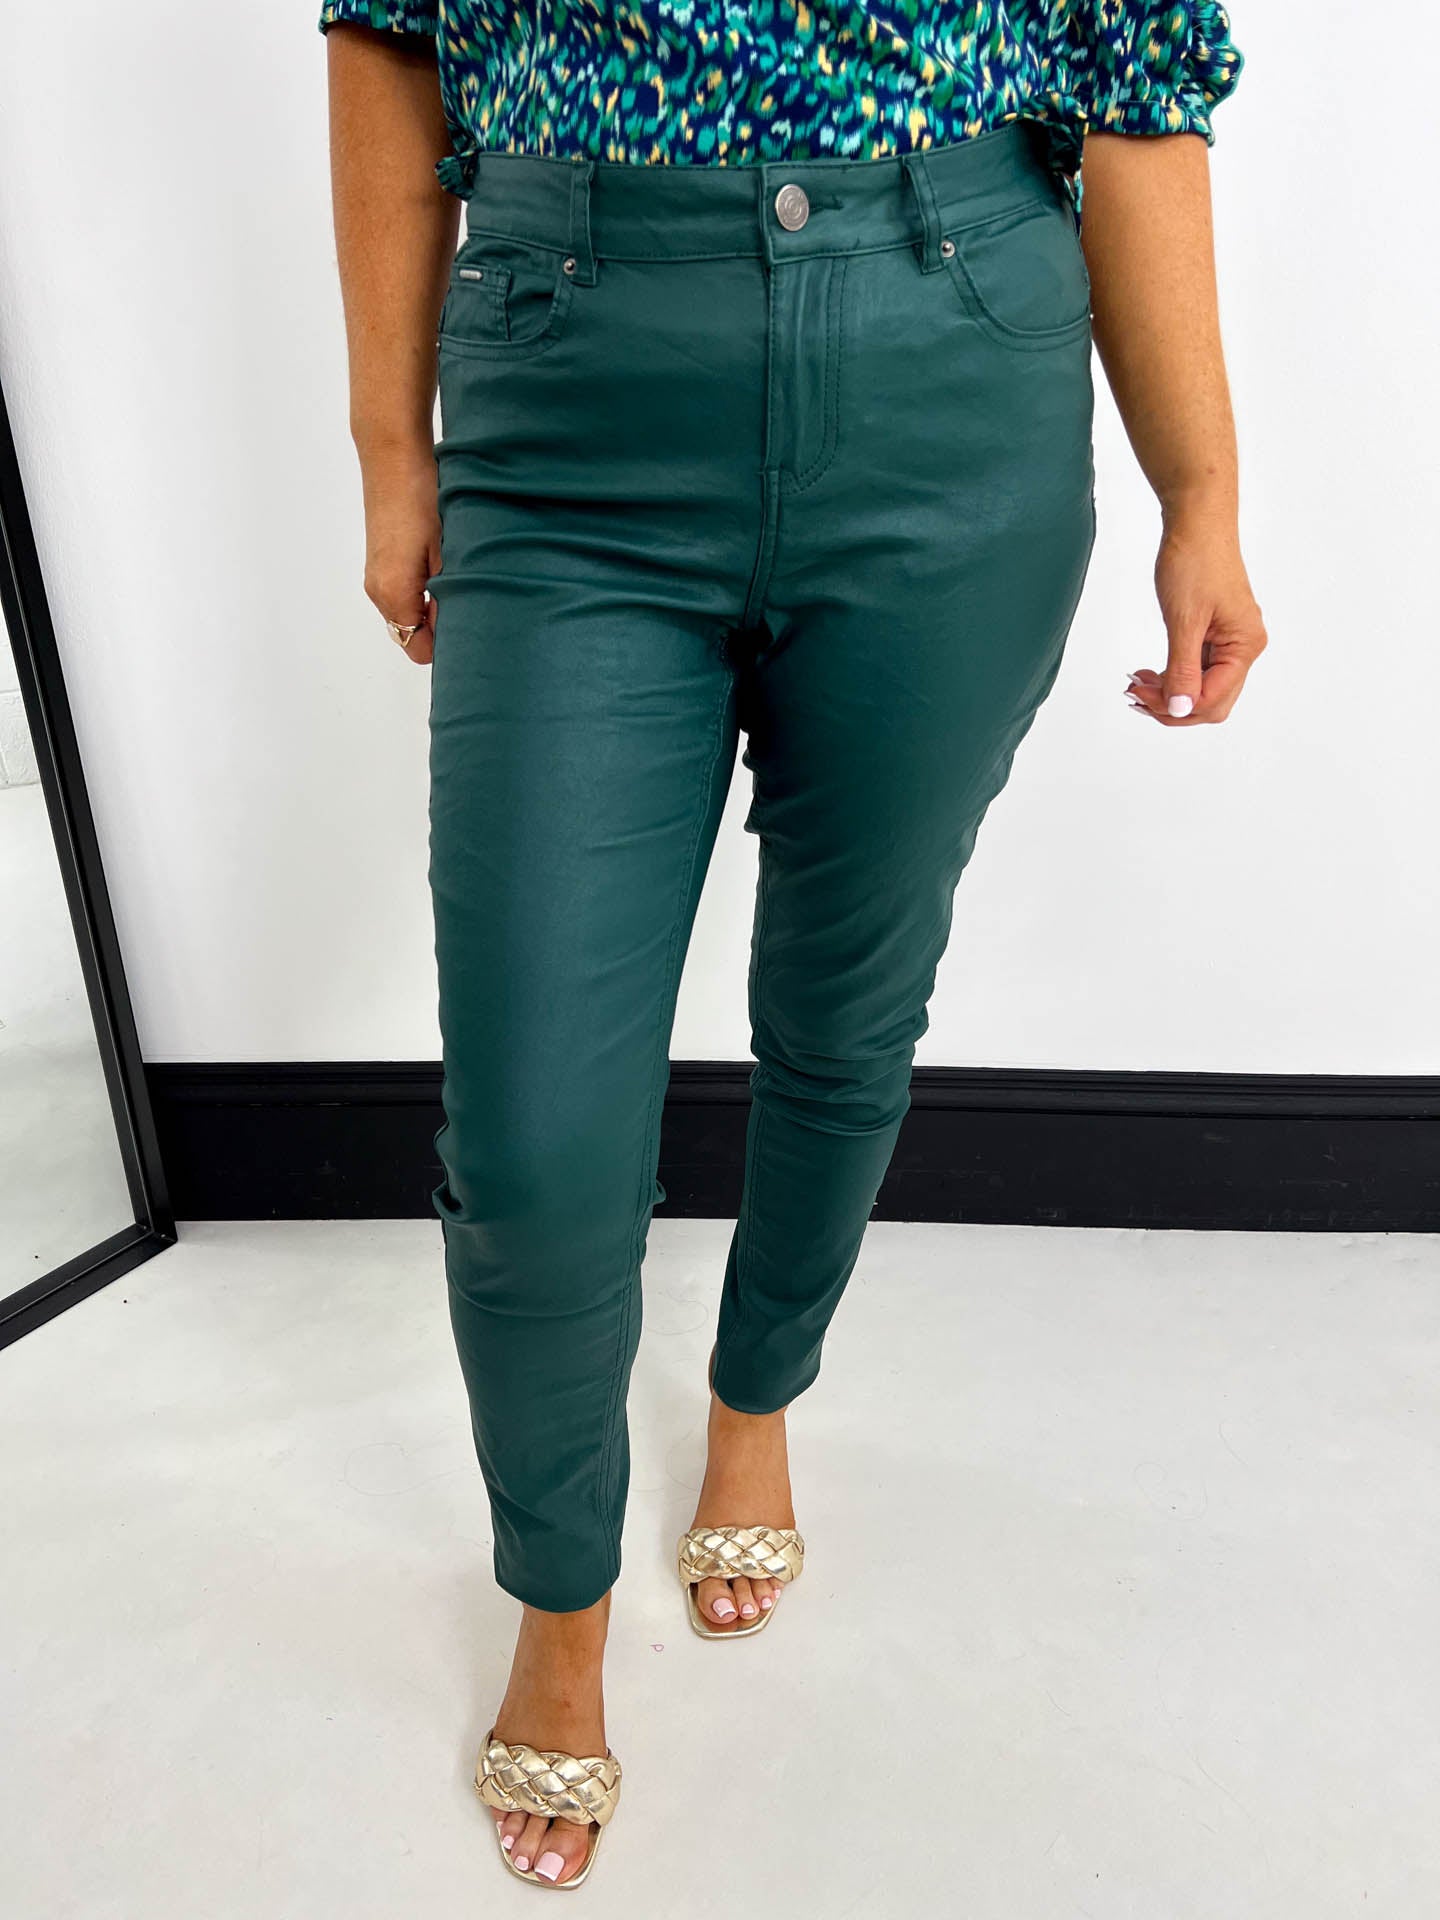 The Prina - Green Wax Coated Jeans